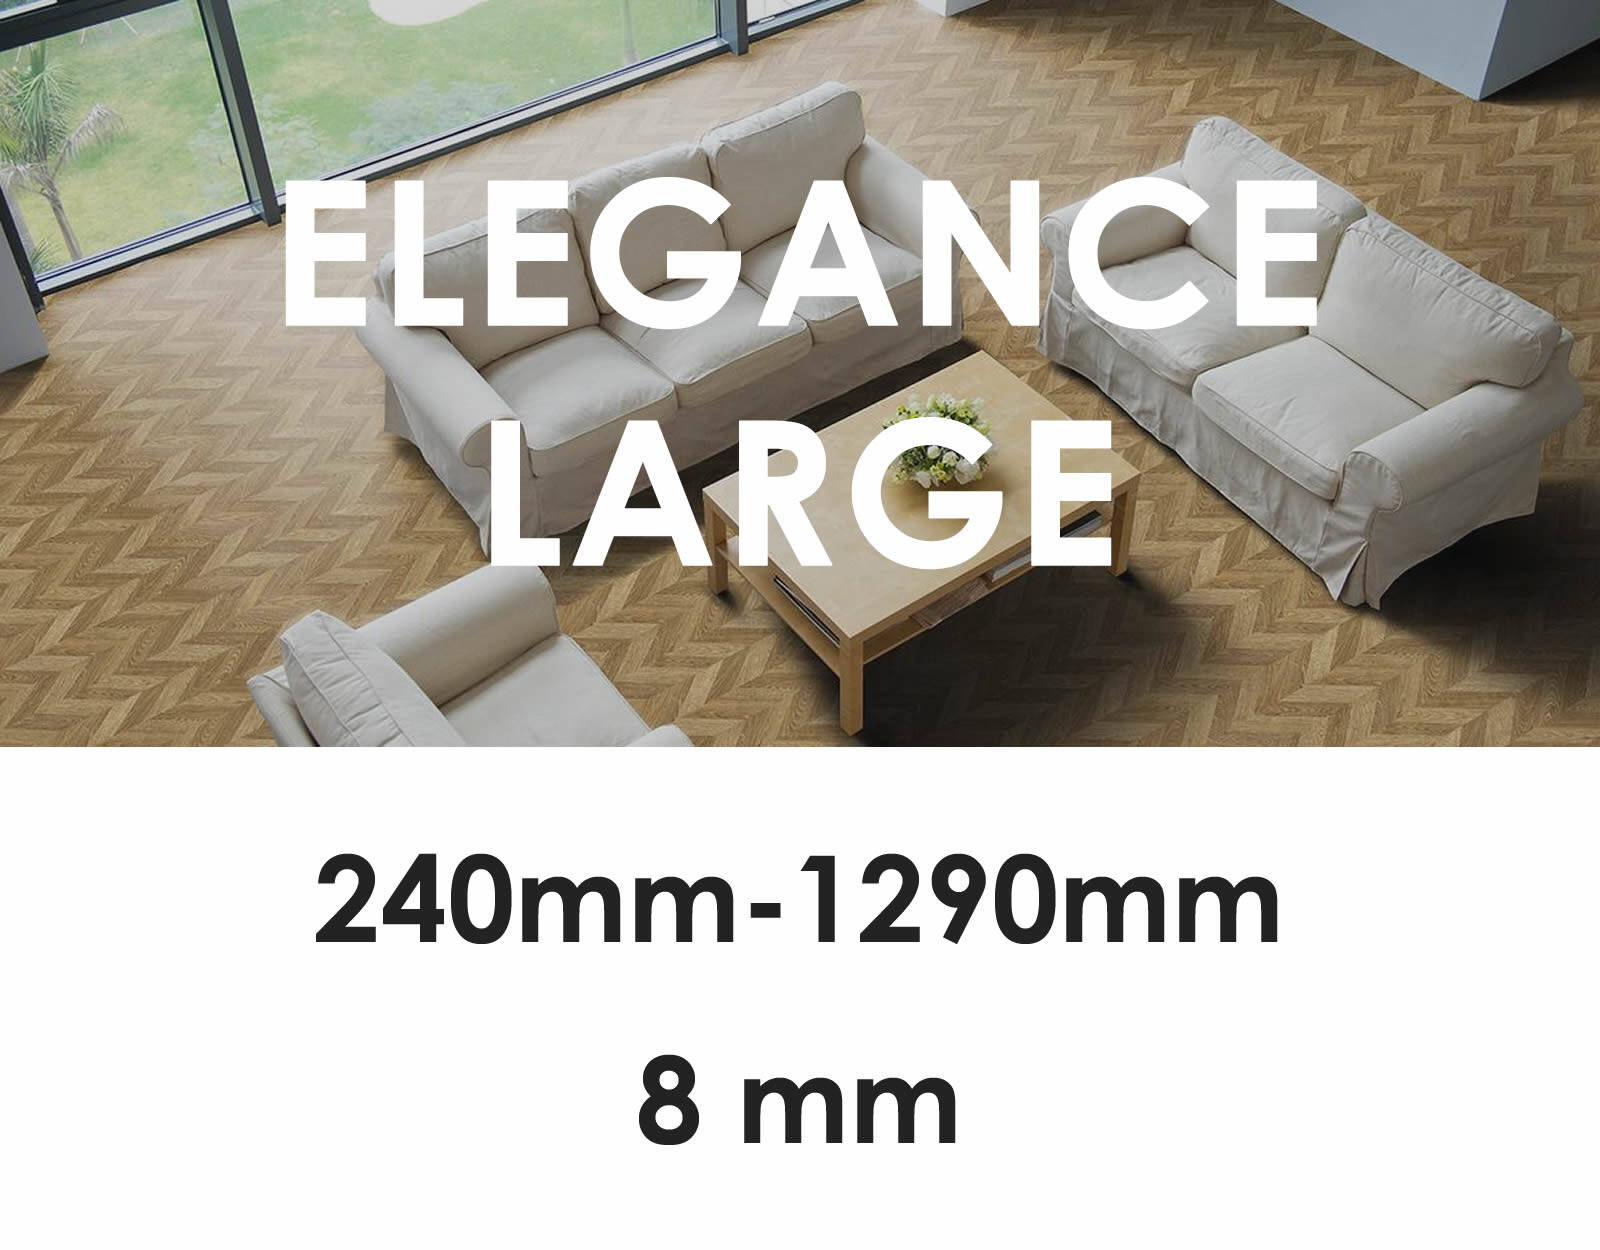 Elegance Large